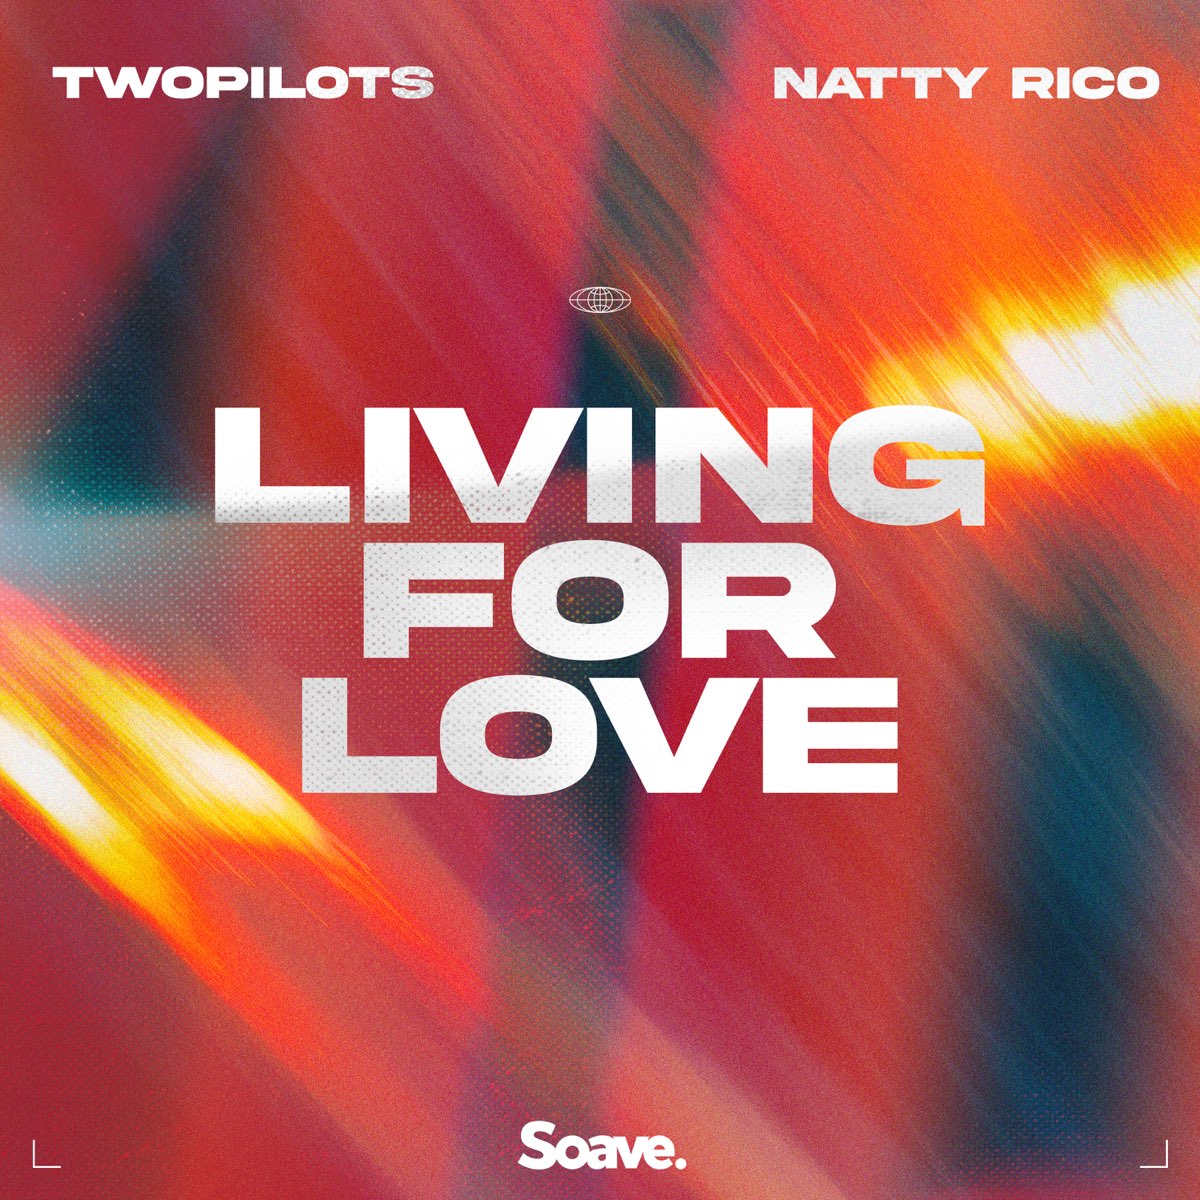 If you had my love twopilots de. Twopilots feat. Natty Rico - Living for Love. AALLAR Dejavu Sam say. Le Tour du monde (feat. Natty Rico & Mika v).